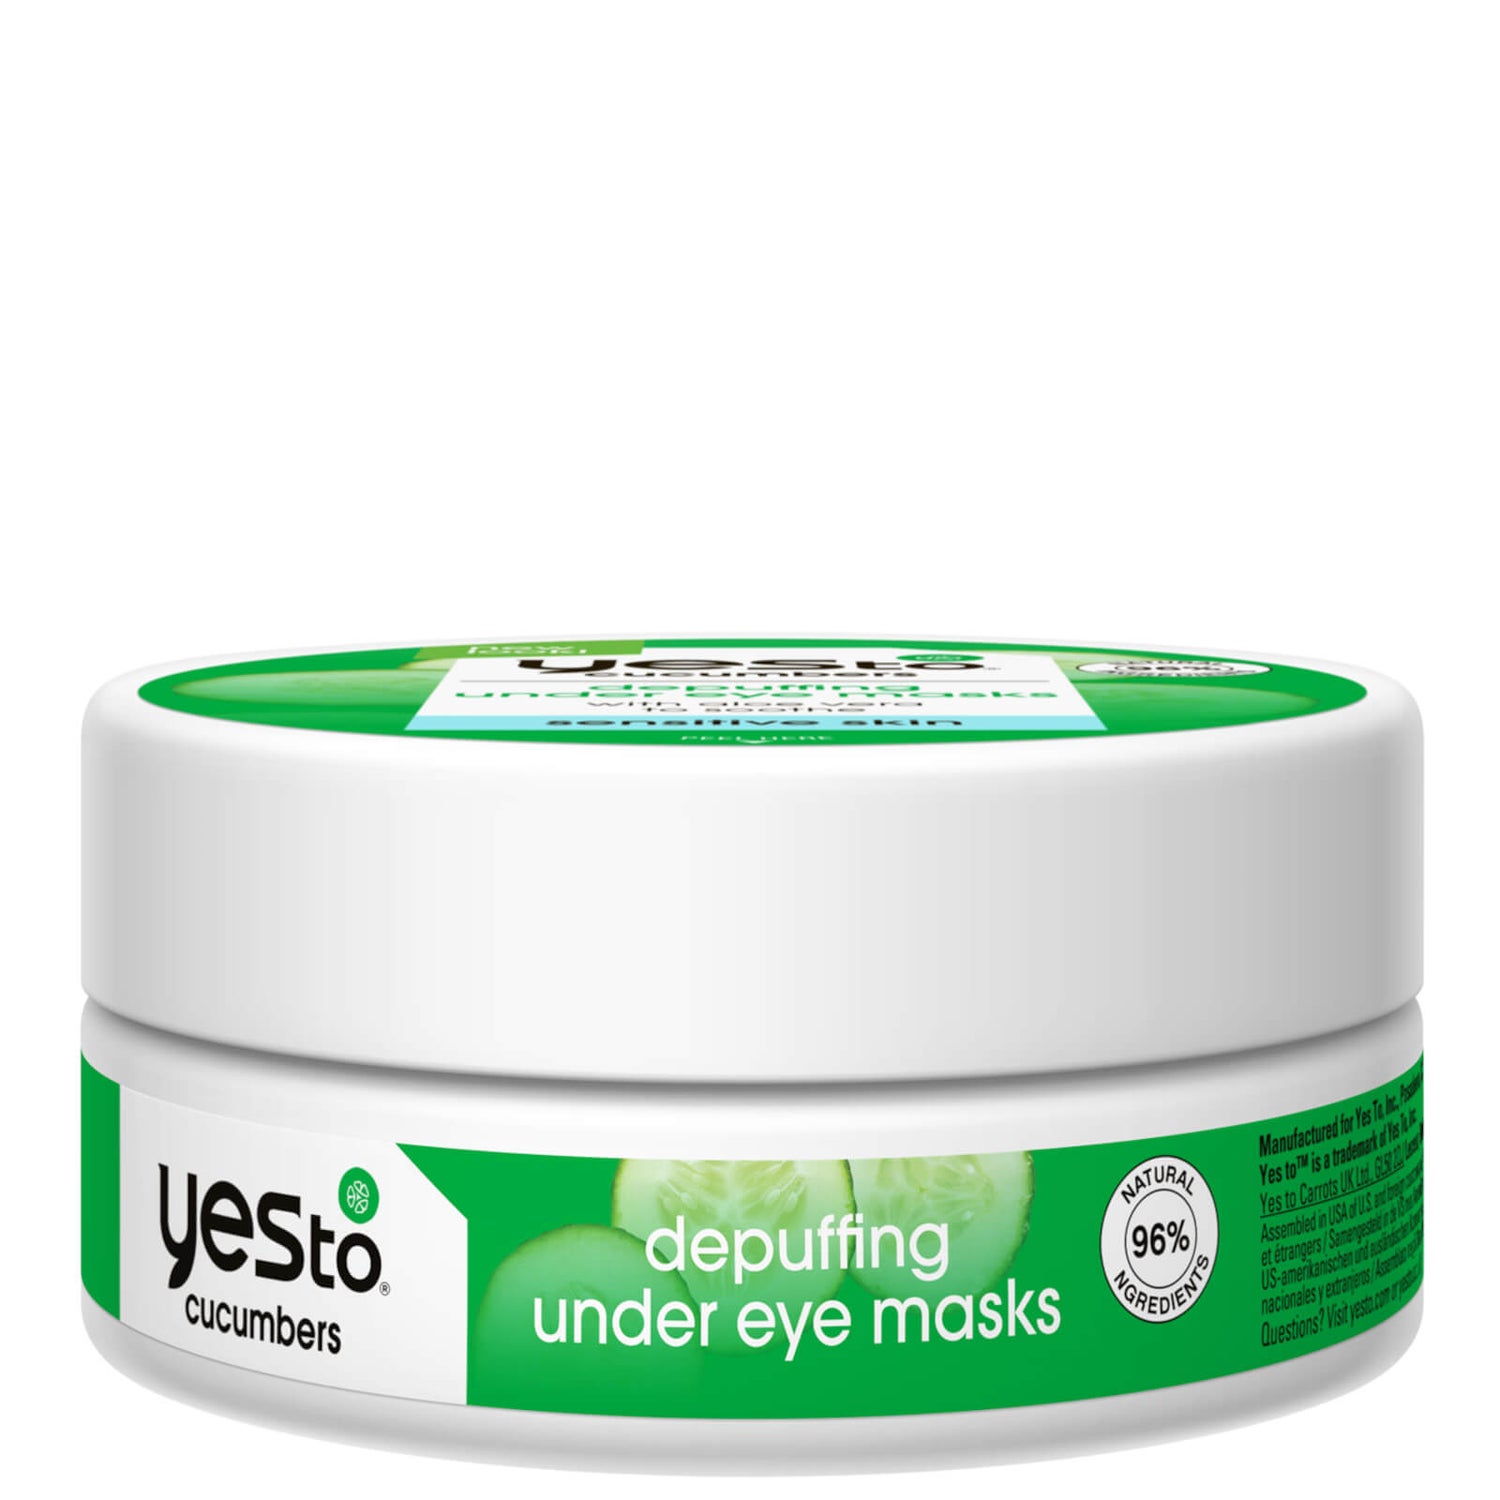 yes to Cucumbers Depuffing Under Eye Masks Jar (8 Pack)